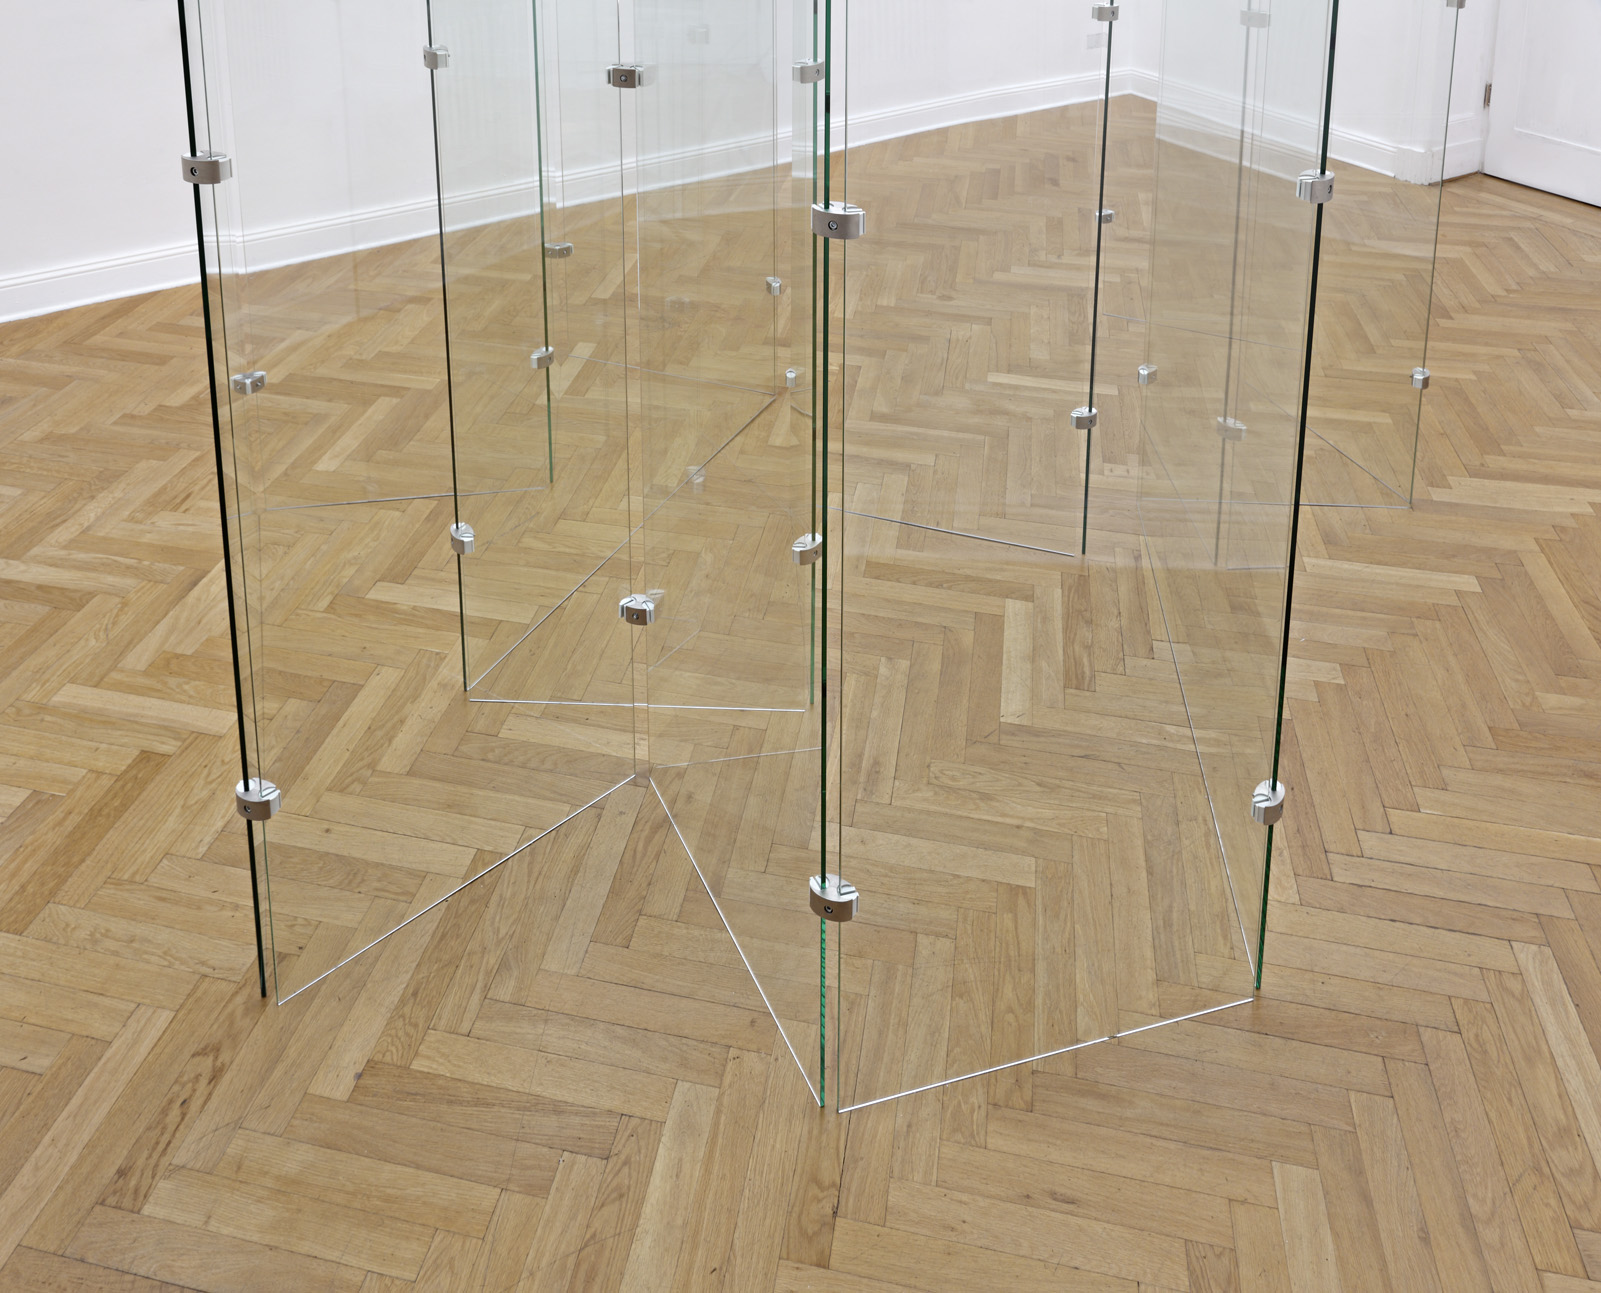 Nicholas Pelzer, 'Custom Utility' (2014) exhibition view. Photo by Hans-Georg Gaul. Image courtesy Future Gallery.